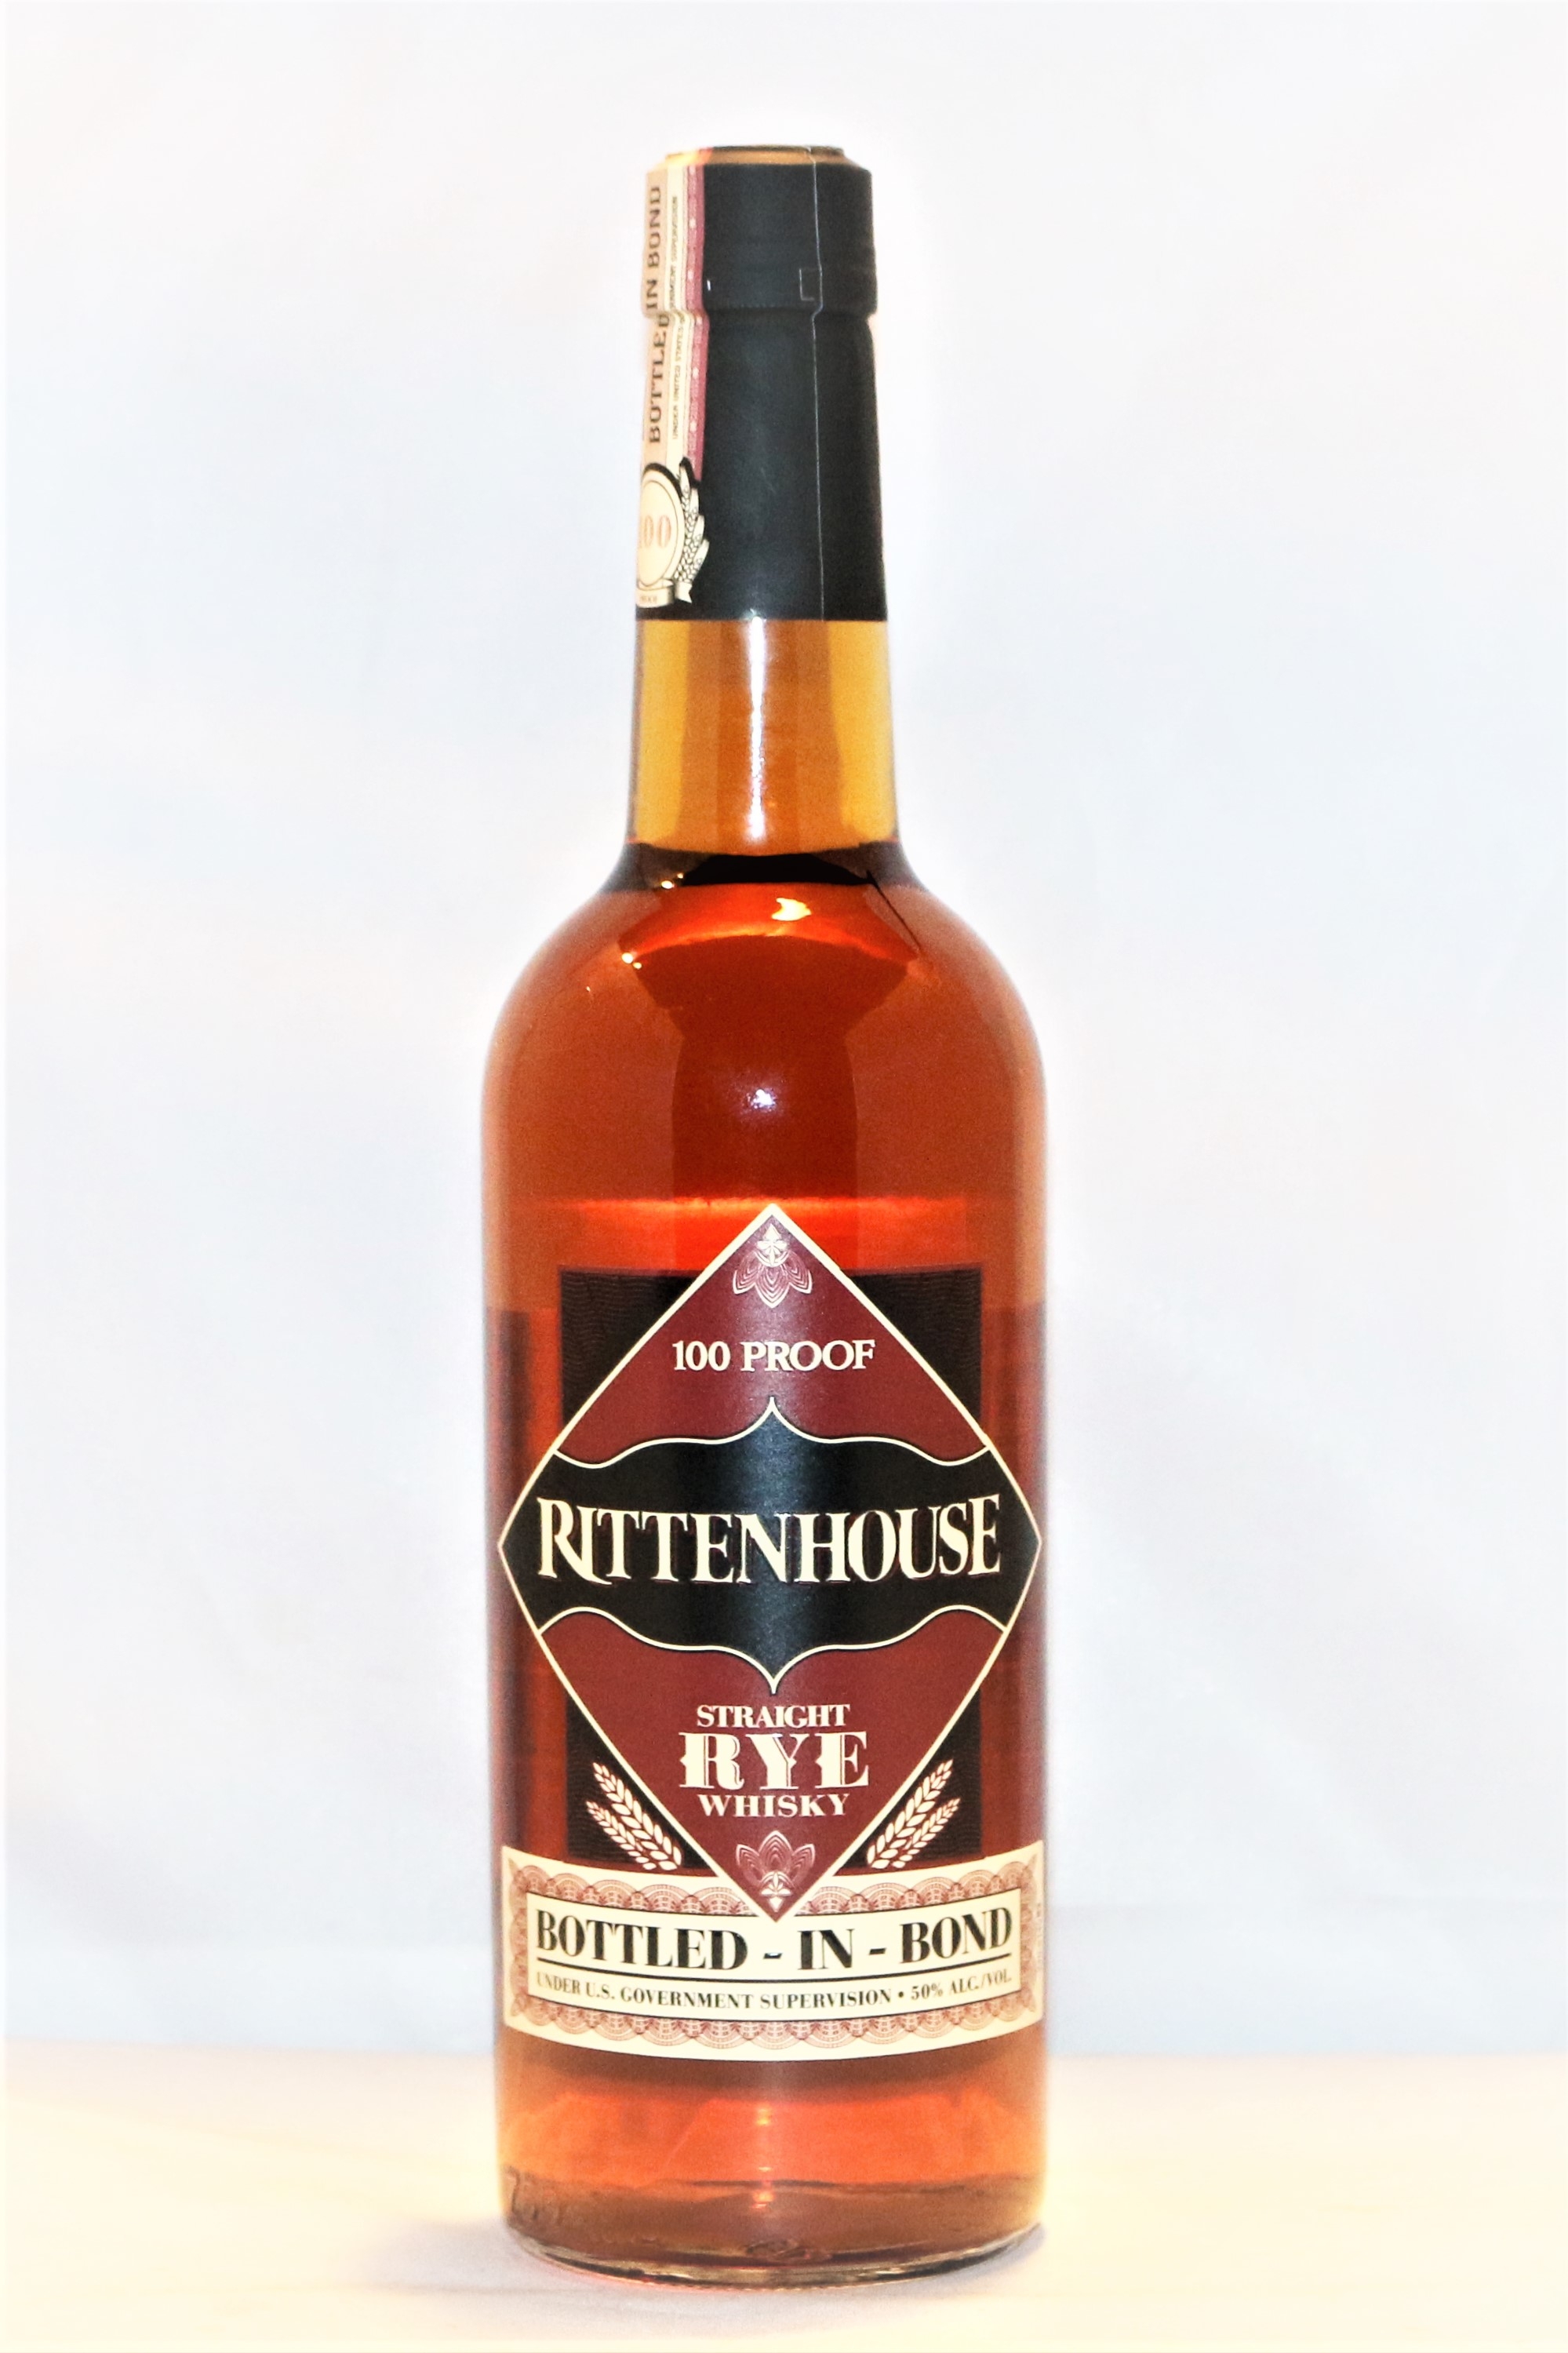 Rittenhouse whiskey